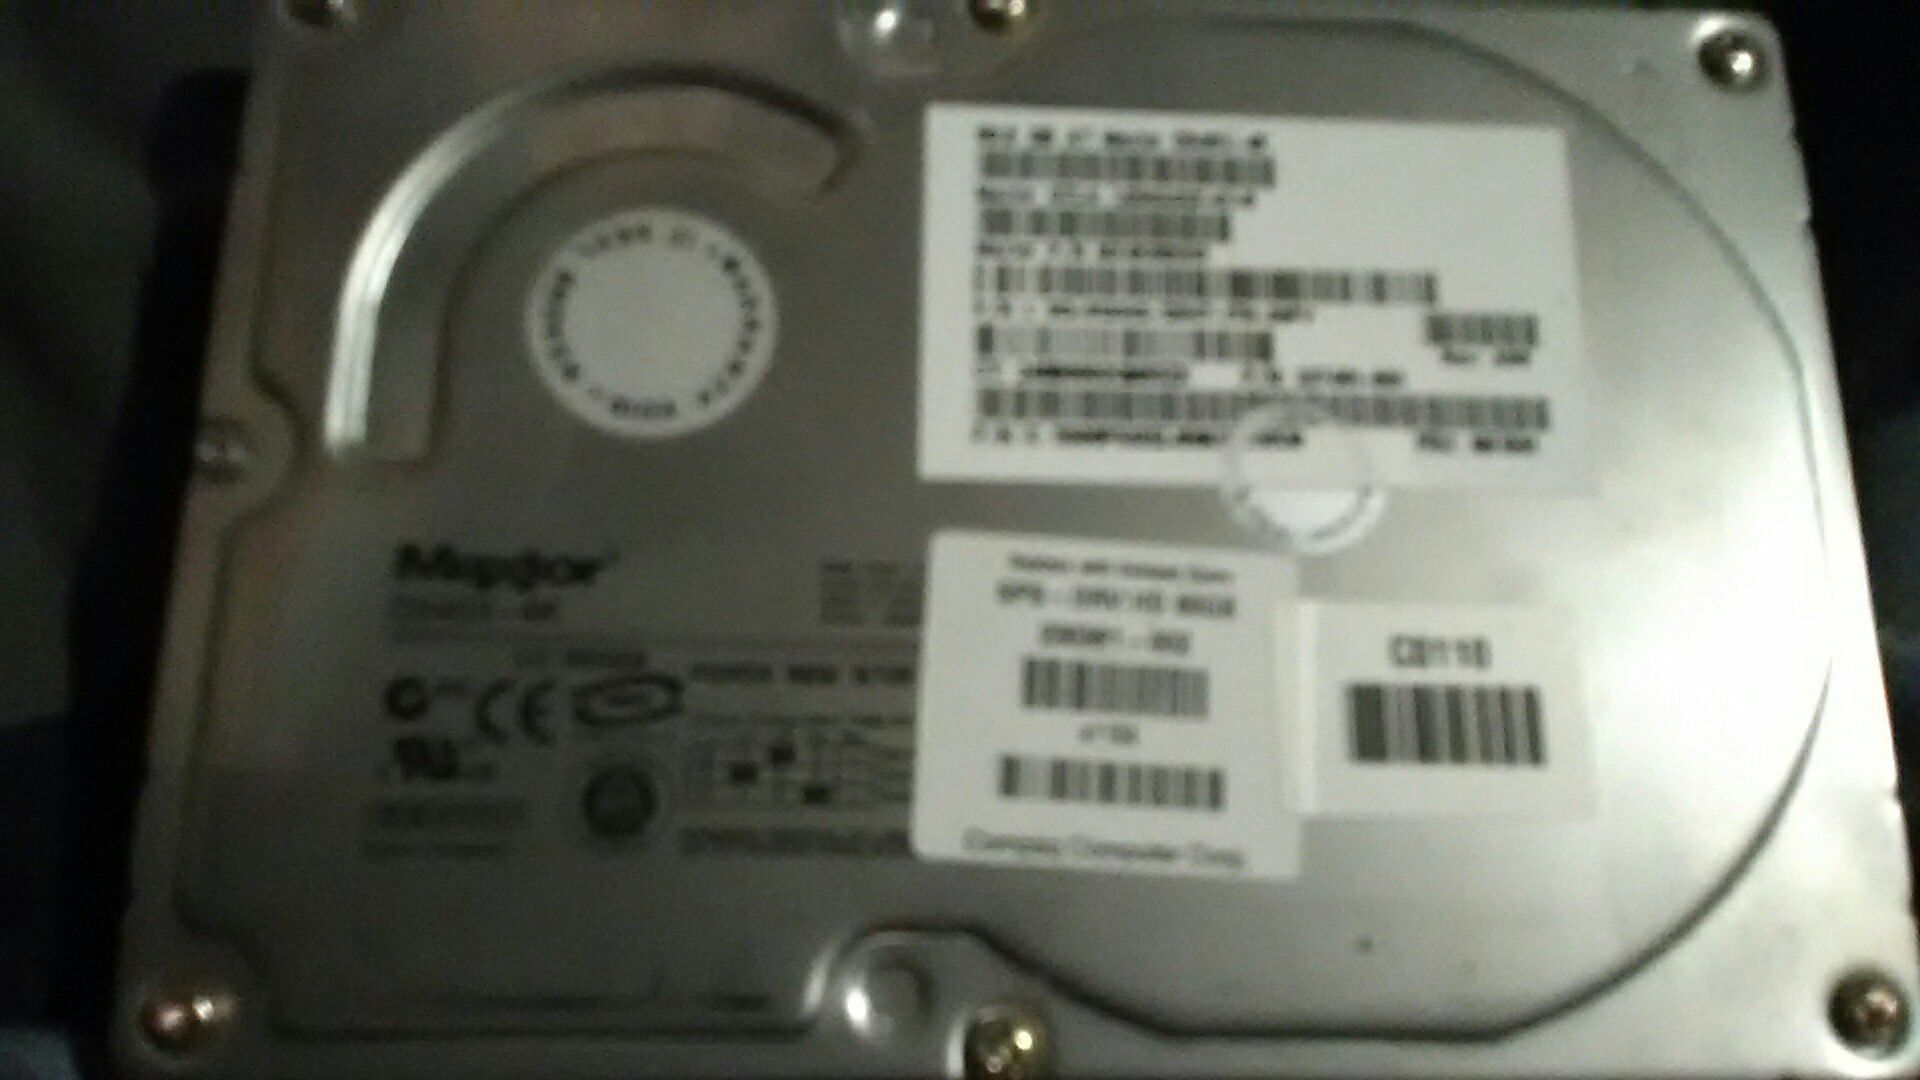 Maxtor hard drive 60Gb